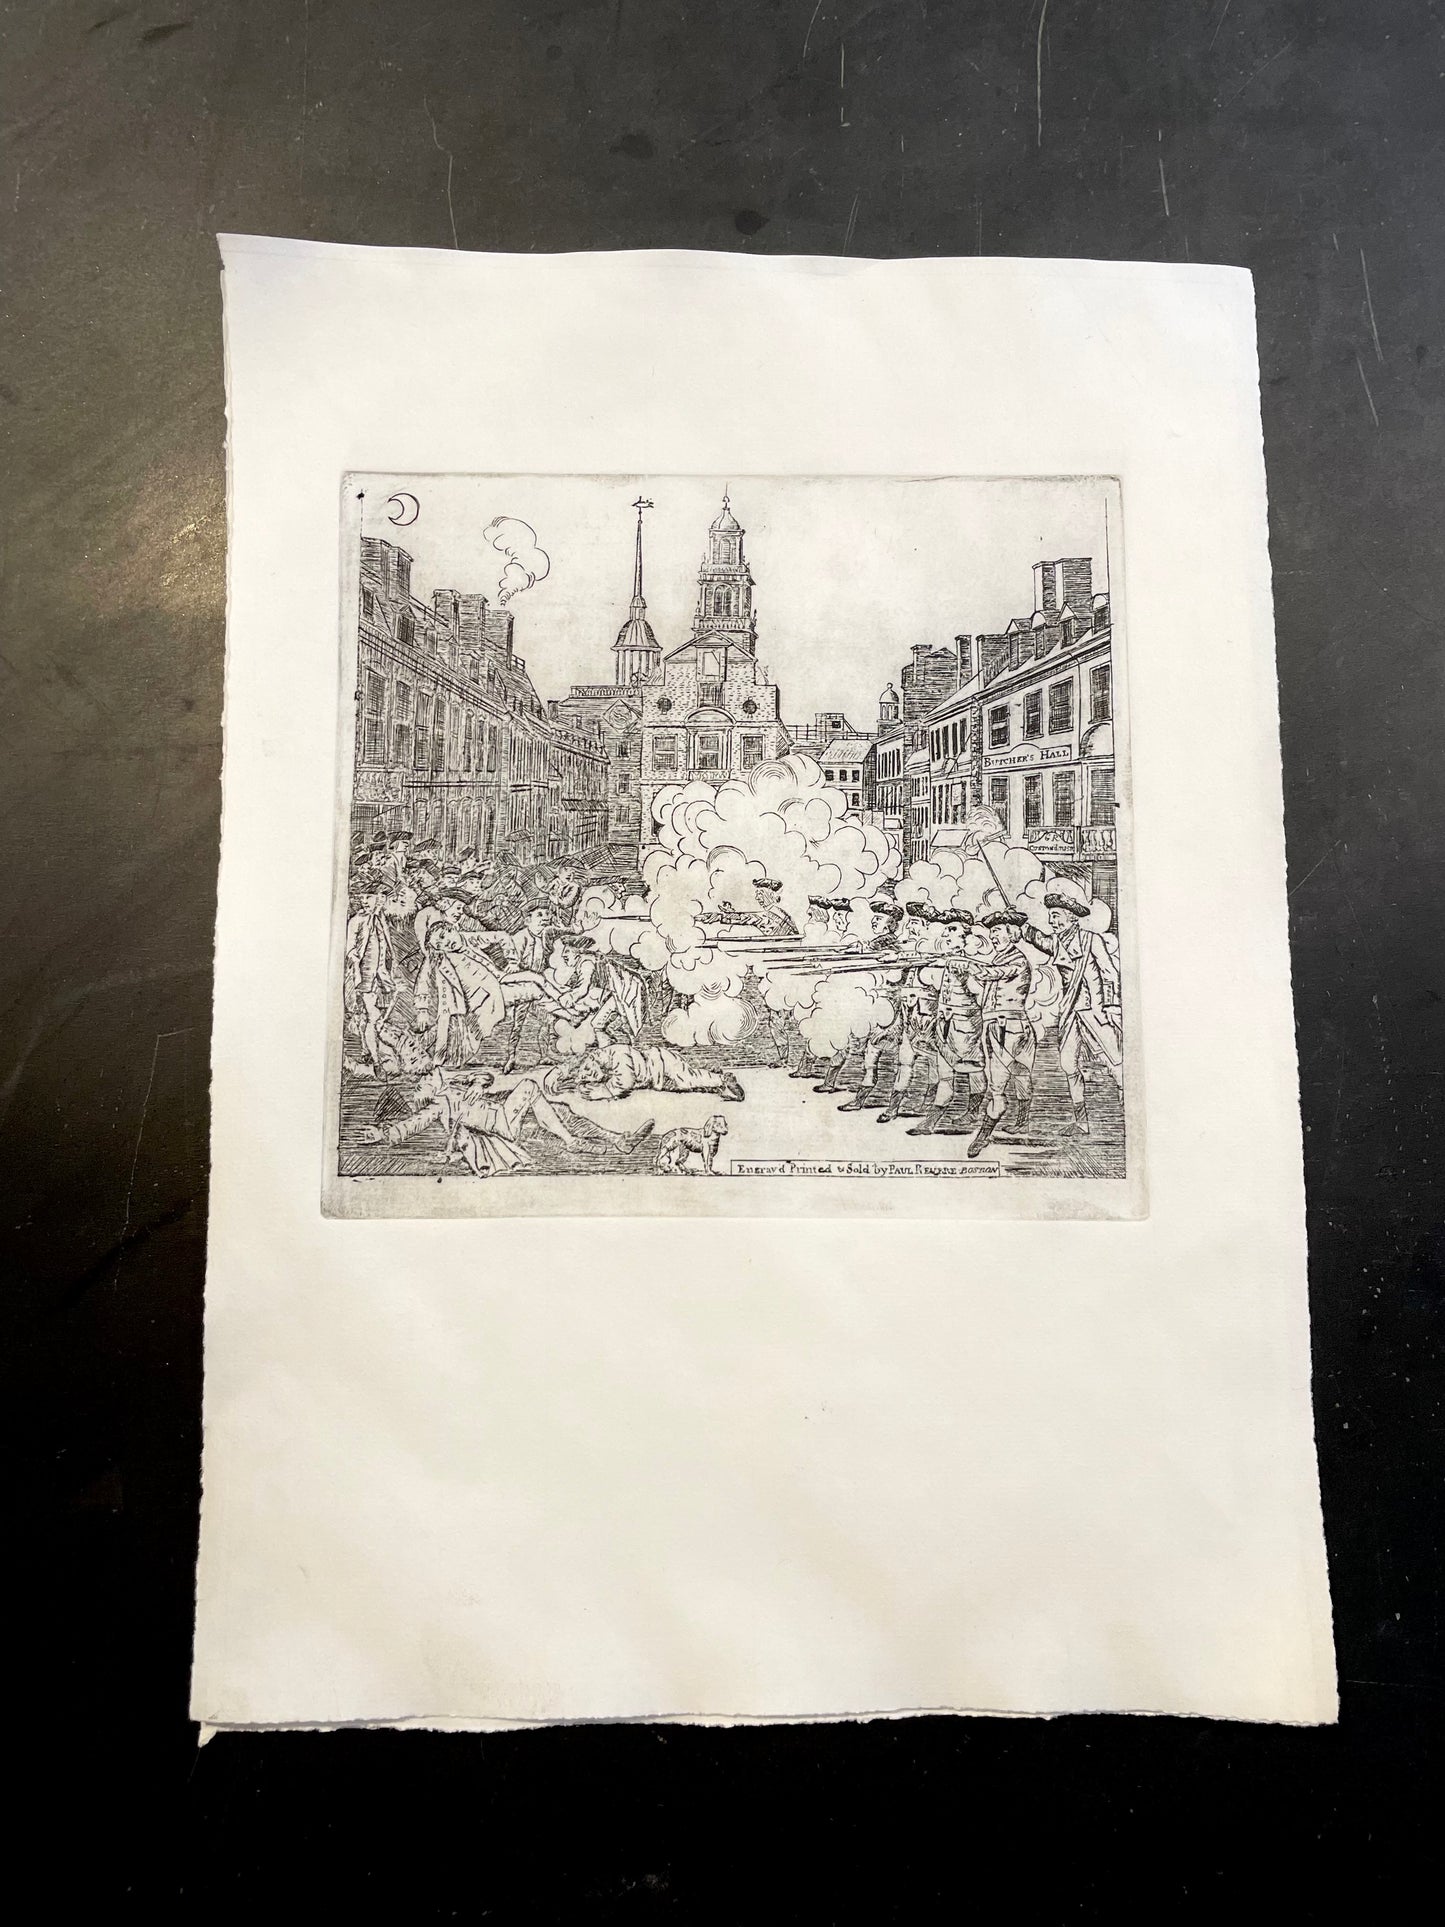 Boston Massacre Engraving - 250th Commemorative